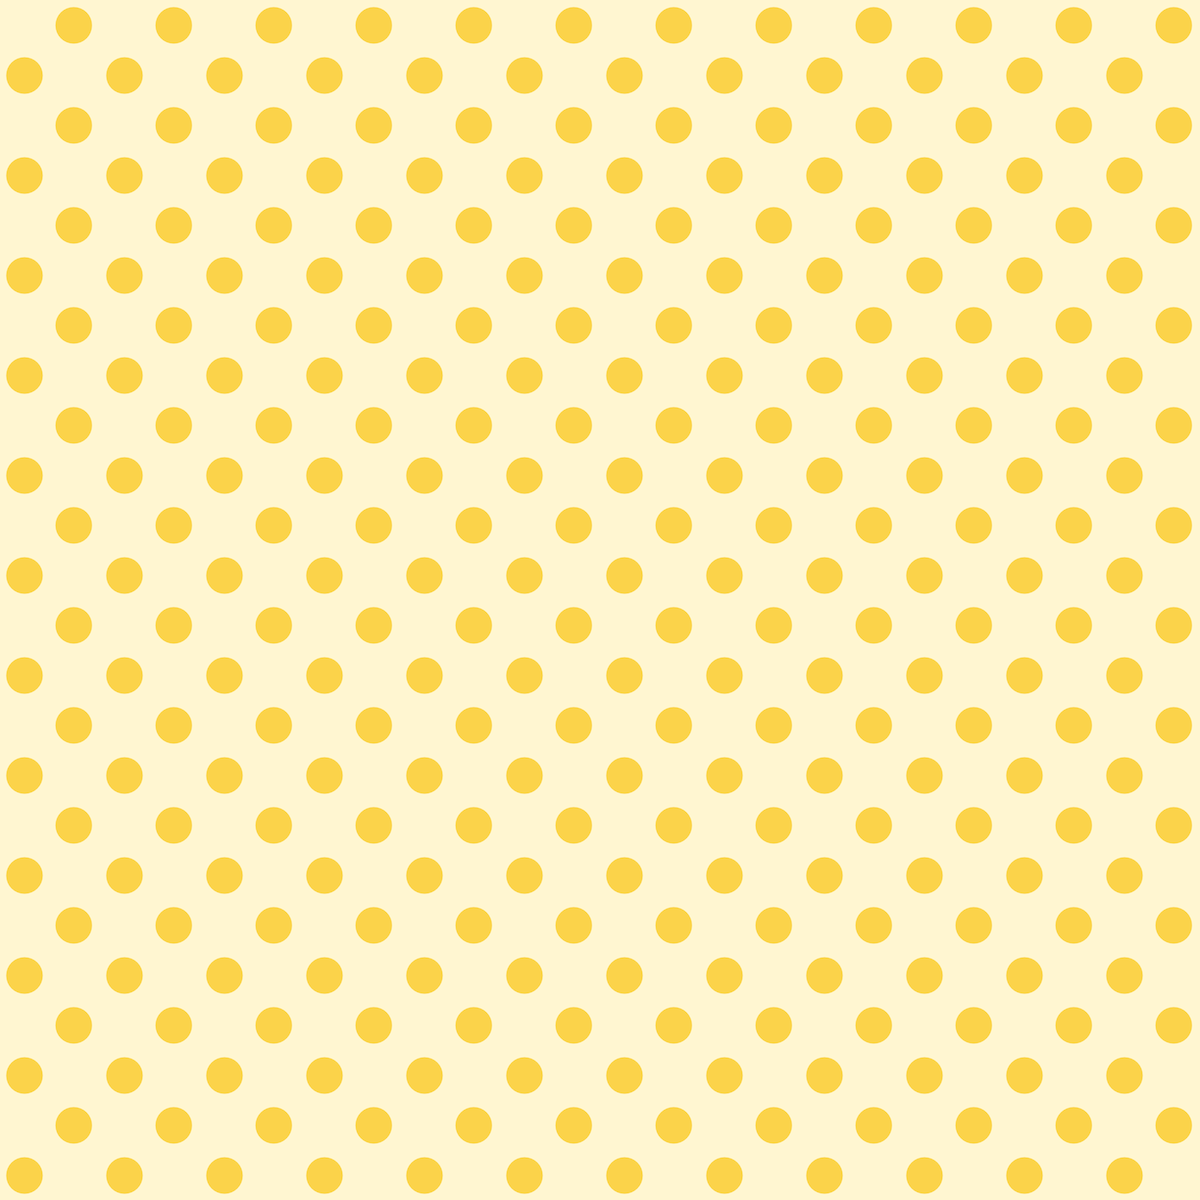 Yellow Polka Dot Wallpapers - Top Free Yellow Polka Dot Backgrounds ...